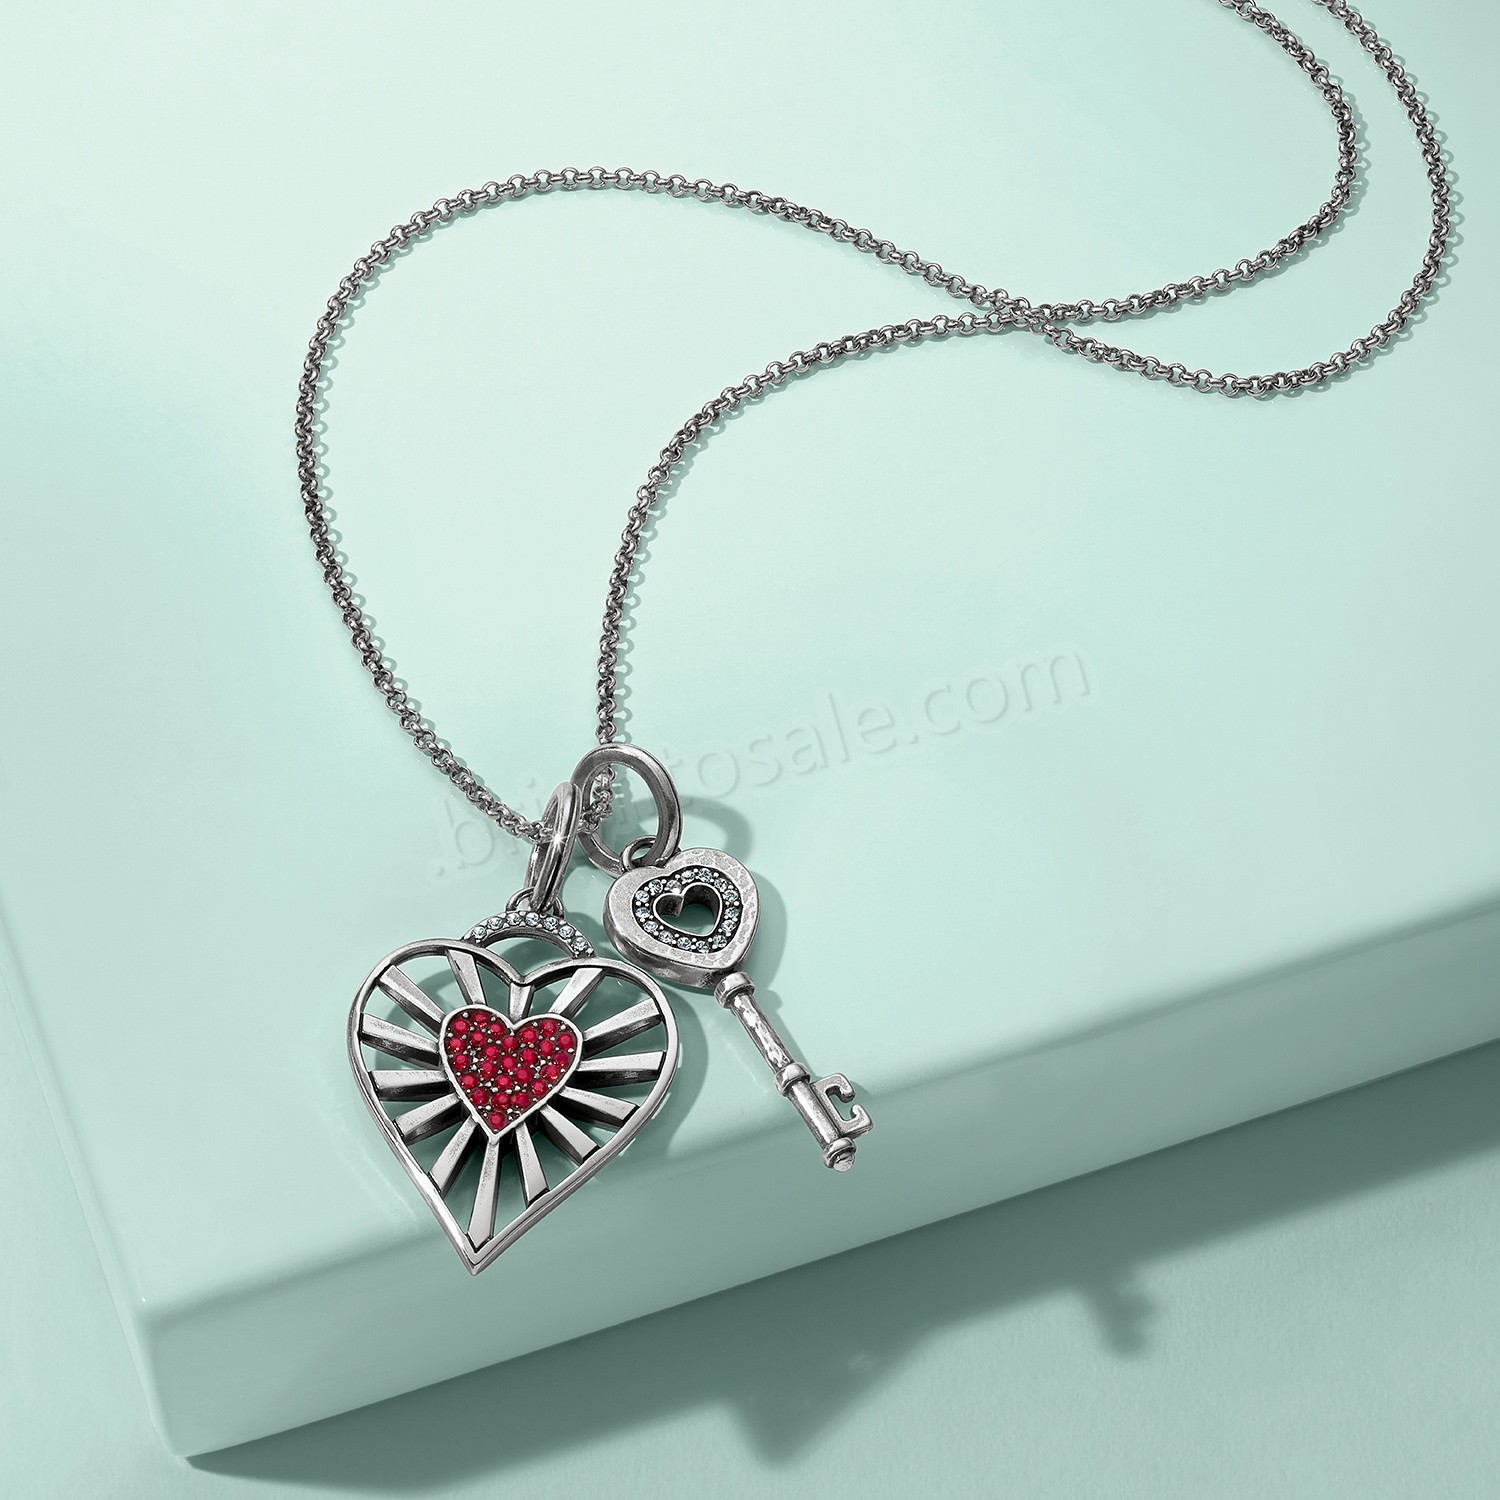 Brighton Collectibles & Online Discount Horn Amulet Necklace Gift Set - Brighton Collectibles & Online Discount Horn Amulet Necklace Gift Set